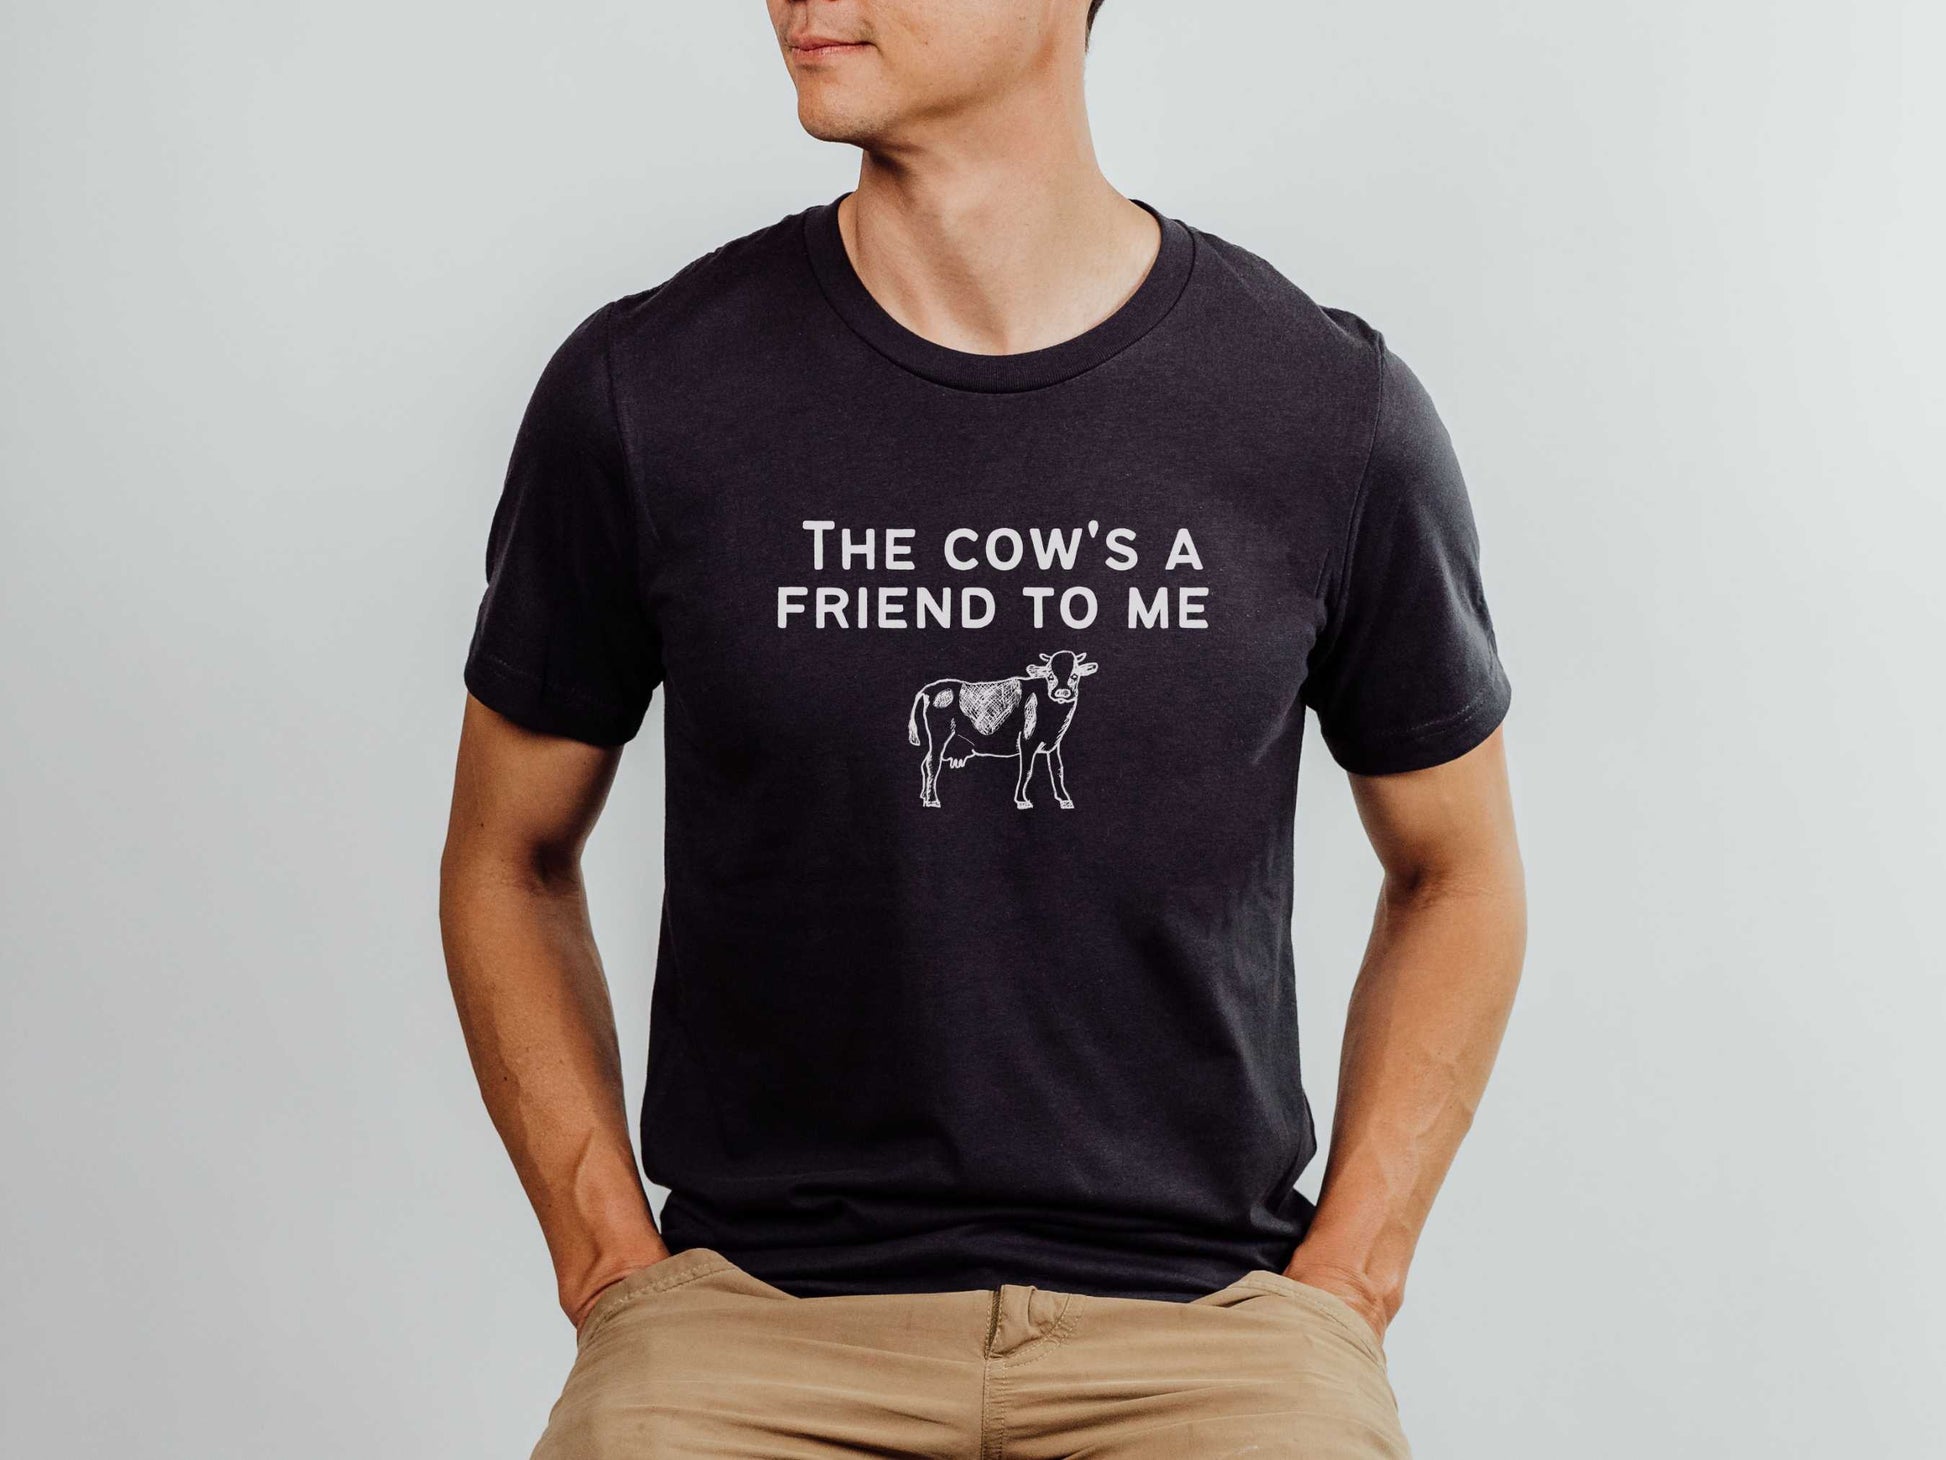 TMBG Cowtown T-Shirt in Dark Gray Heather